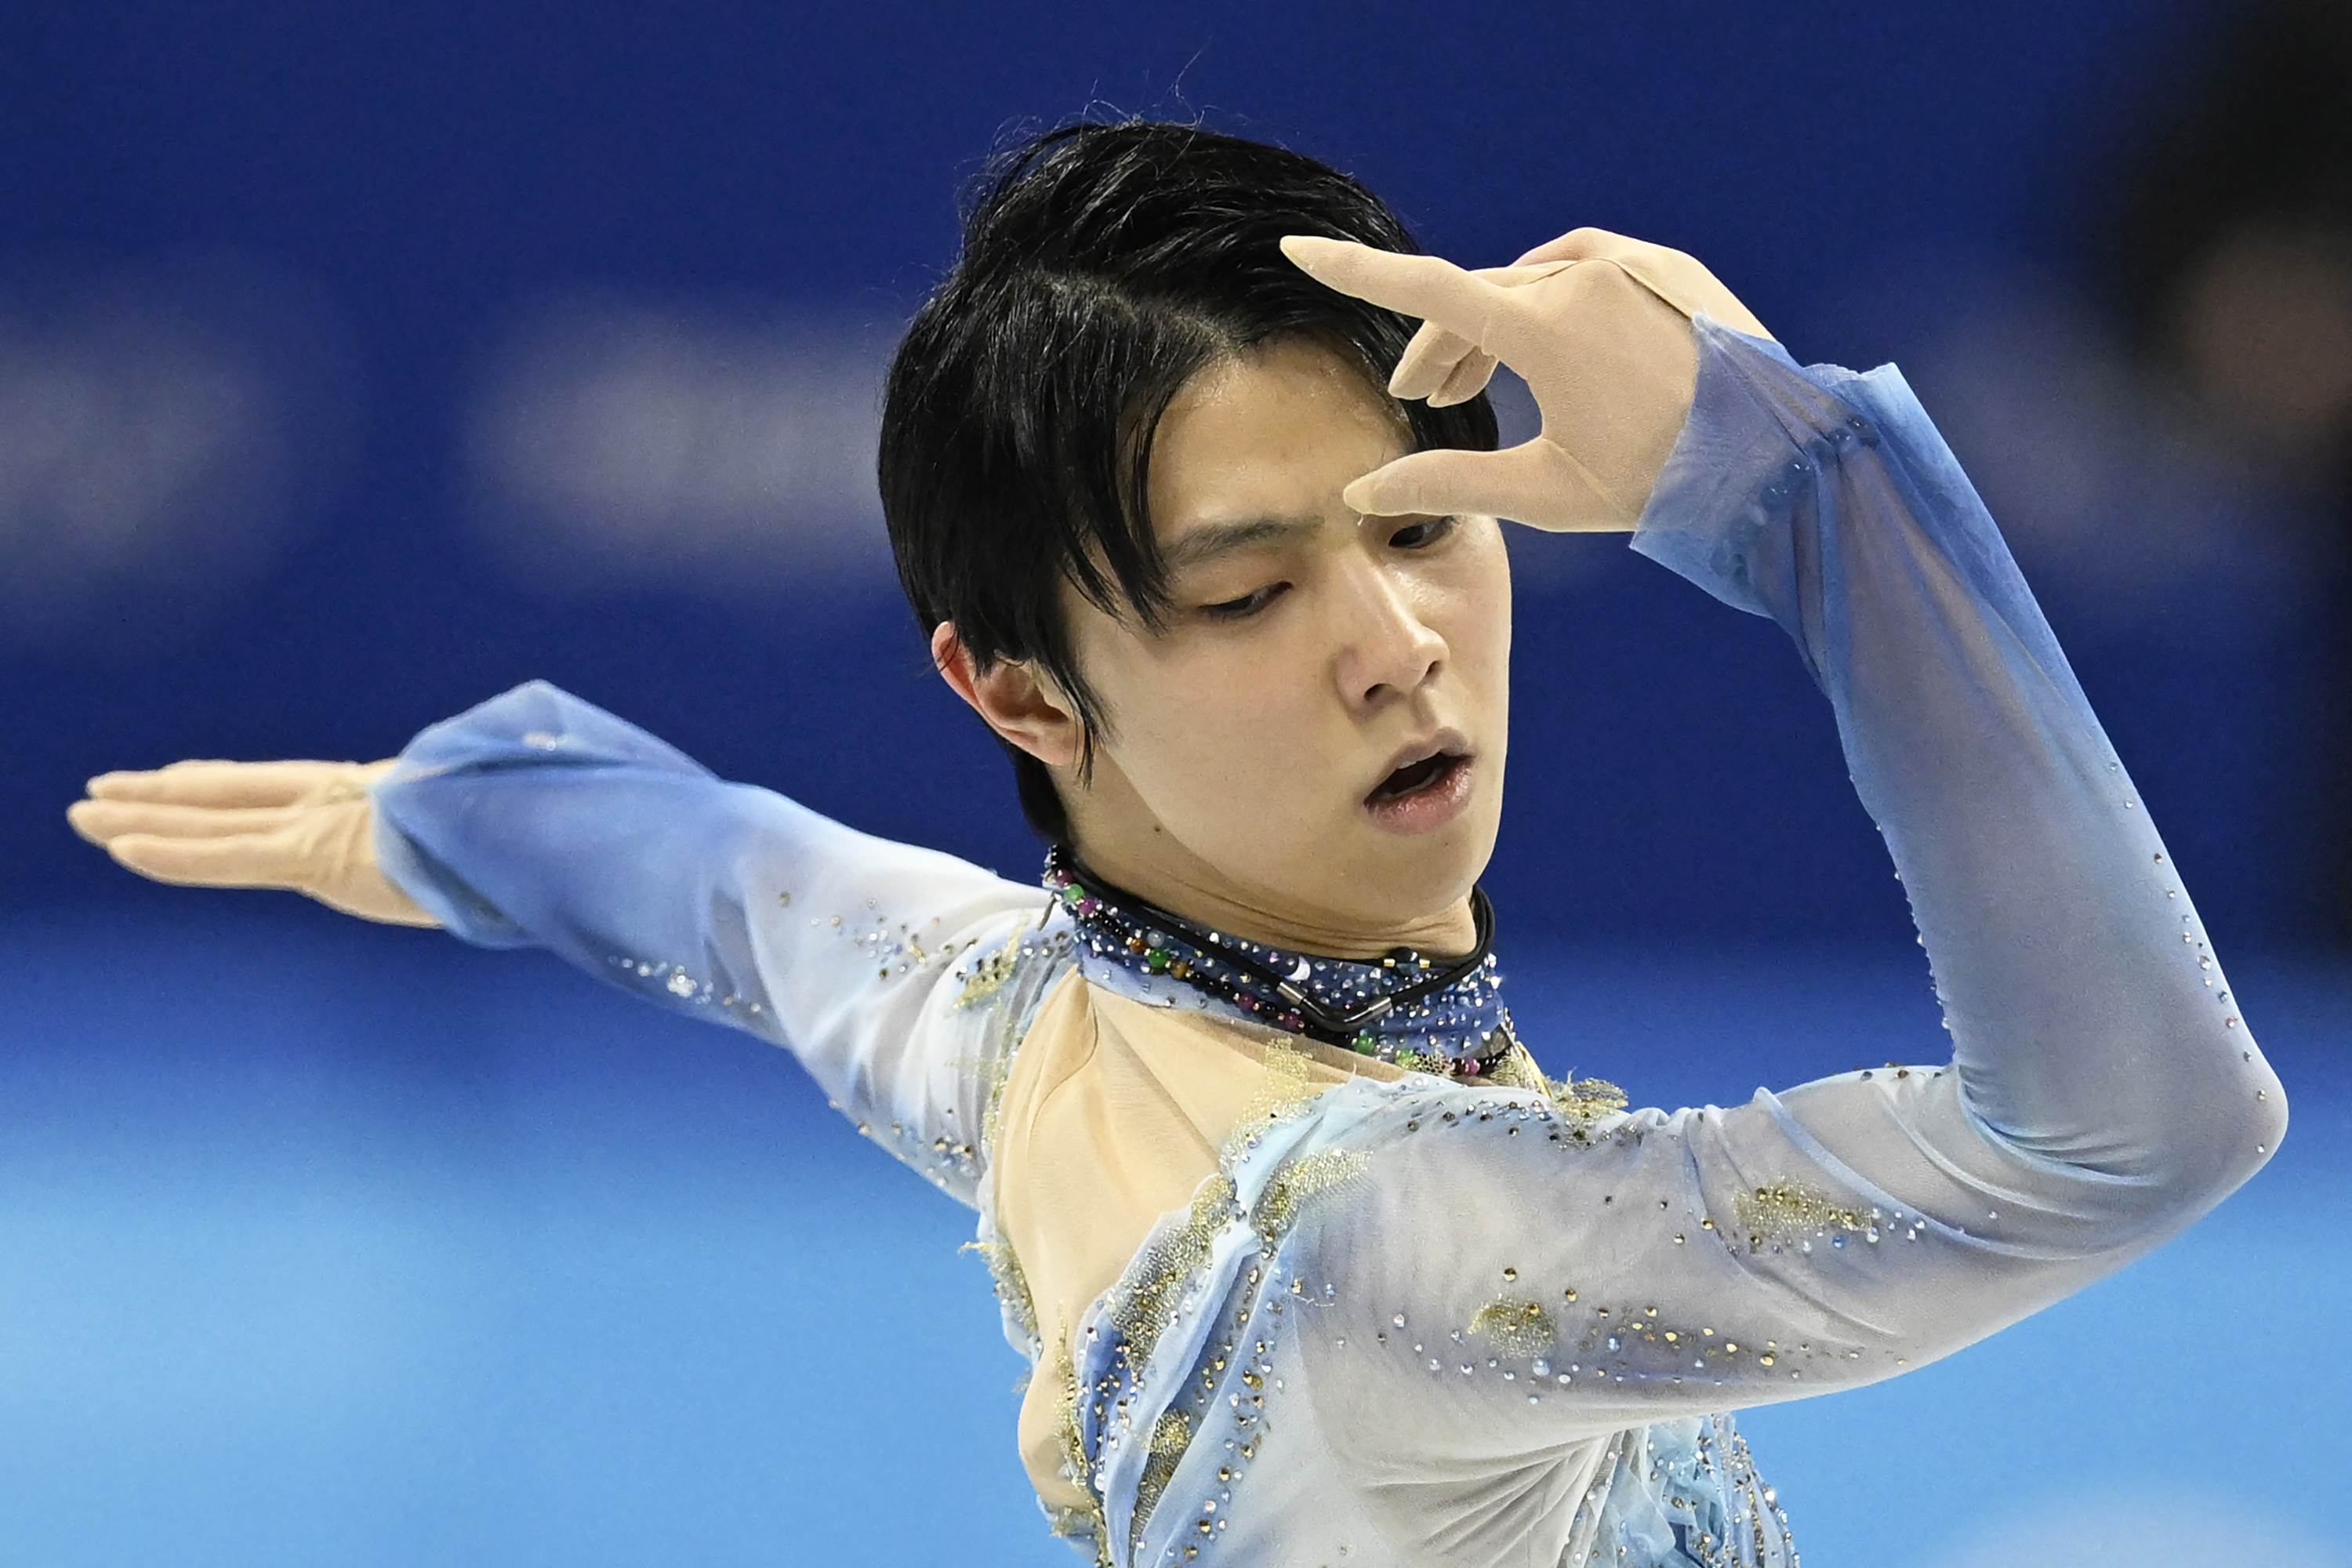 Japan's Yuzuru Hanyu disappointed in the men's single skating short program on Tuesday.